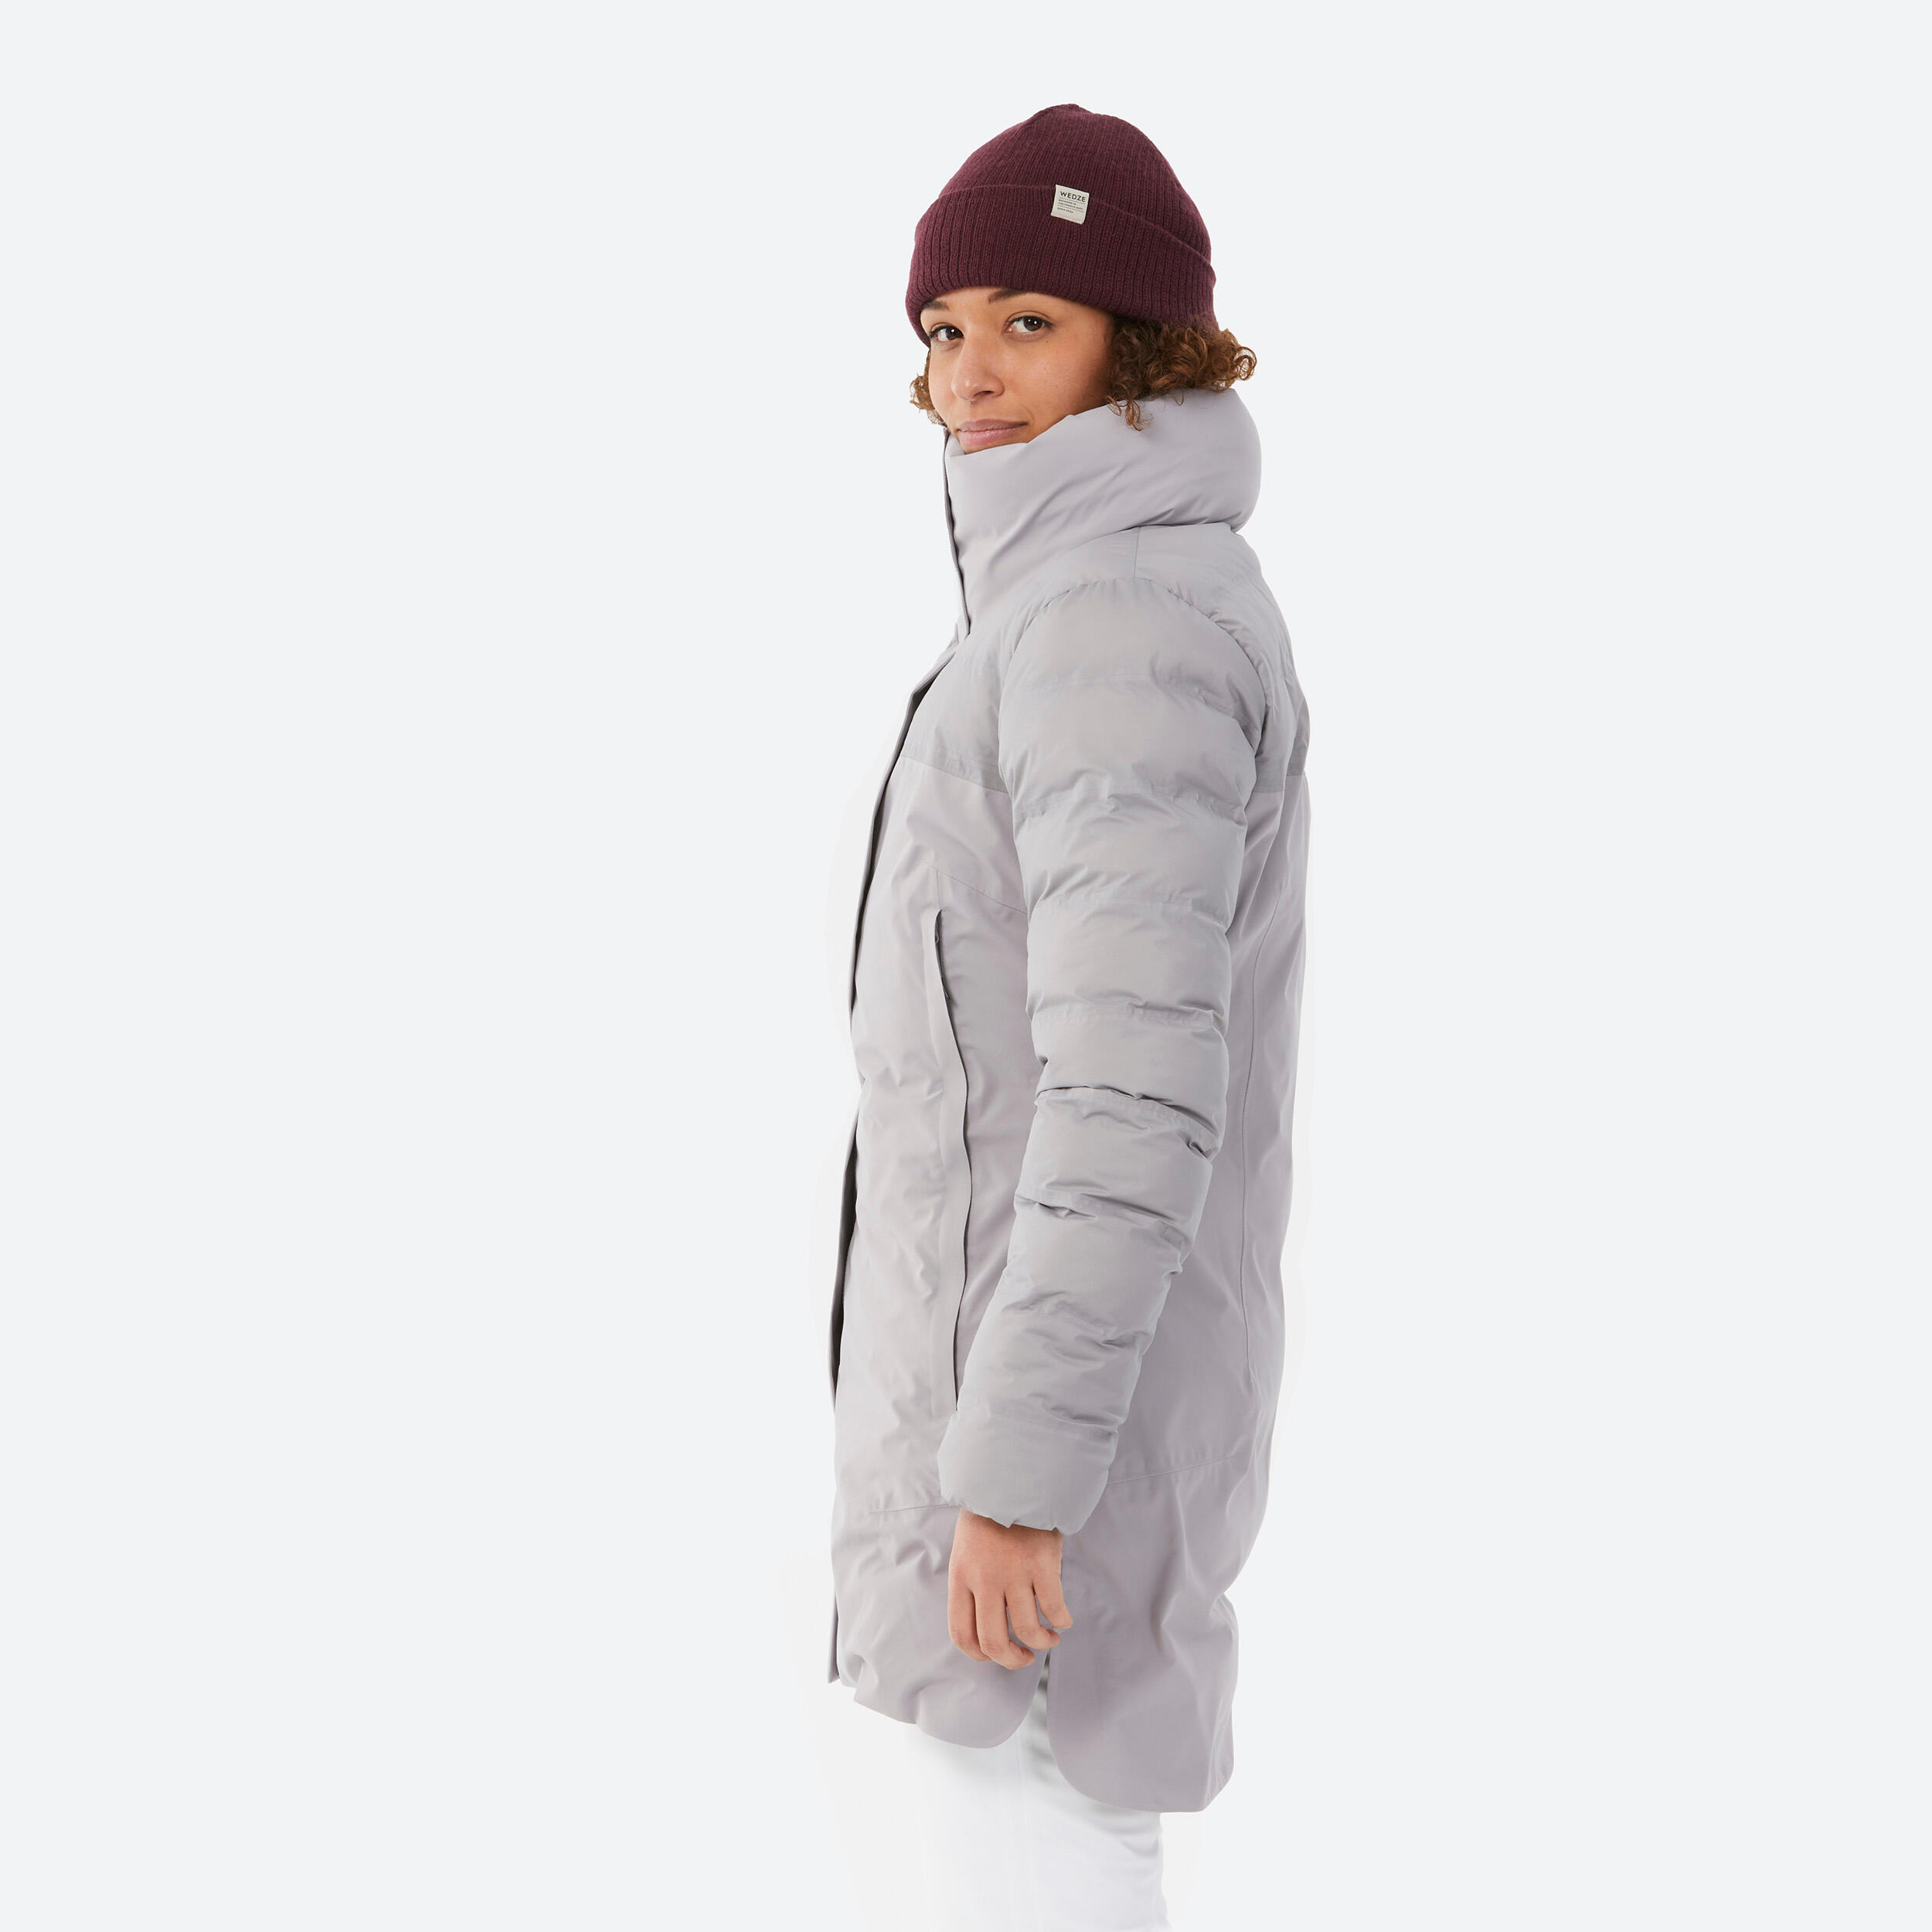 Women's long warm ski jacket 500 - light grey 4/7